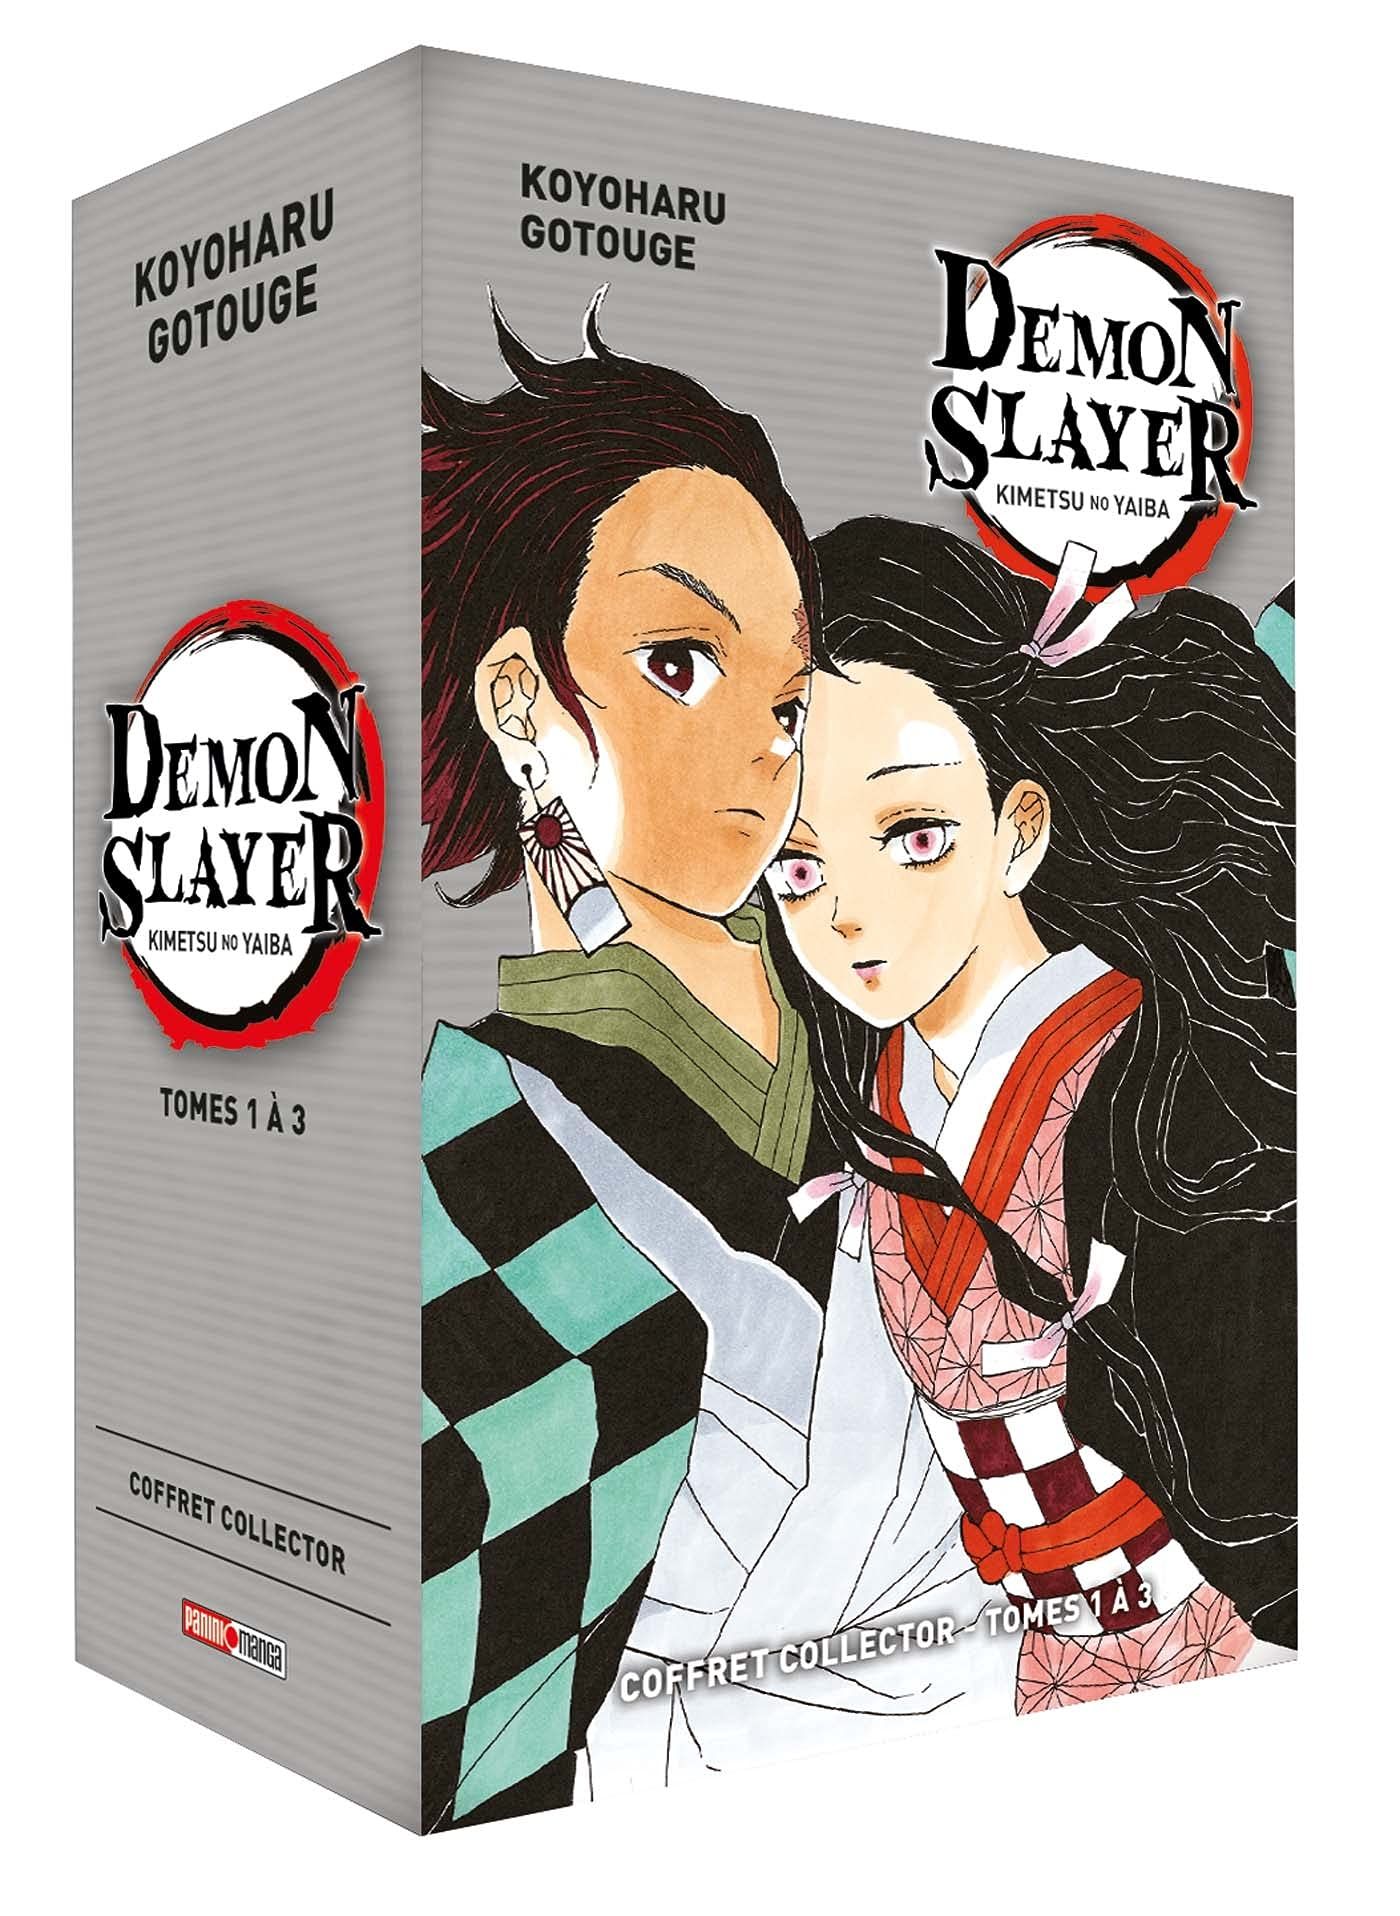 Mangas Demon Slayer Coffrets Collector Canton Vaud 